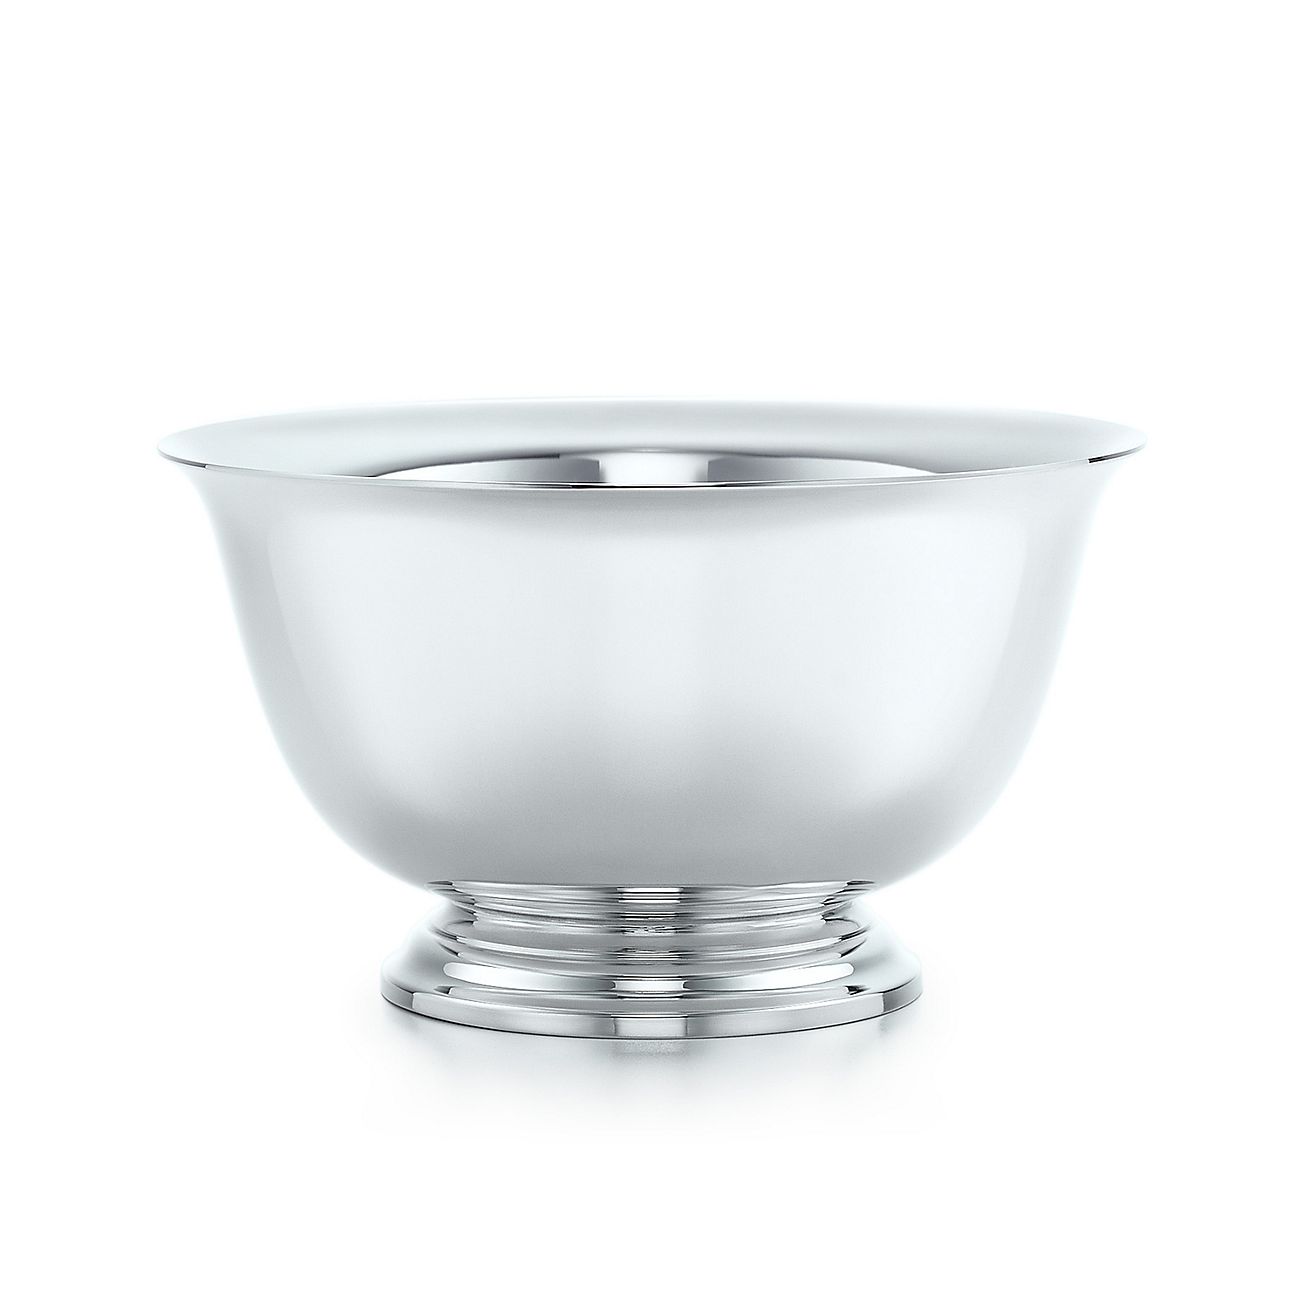 Revere bowl in sterling silver 